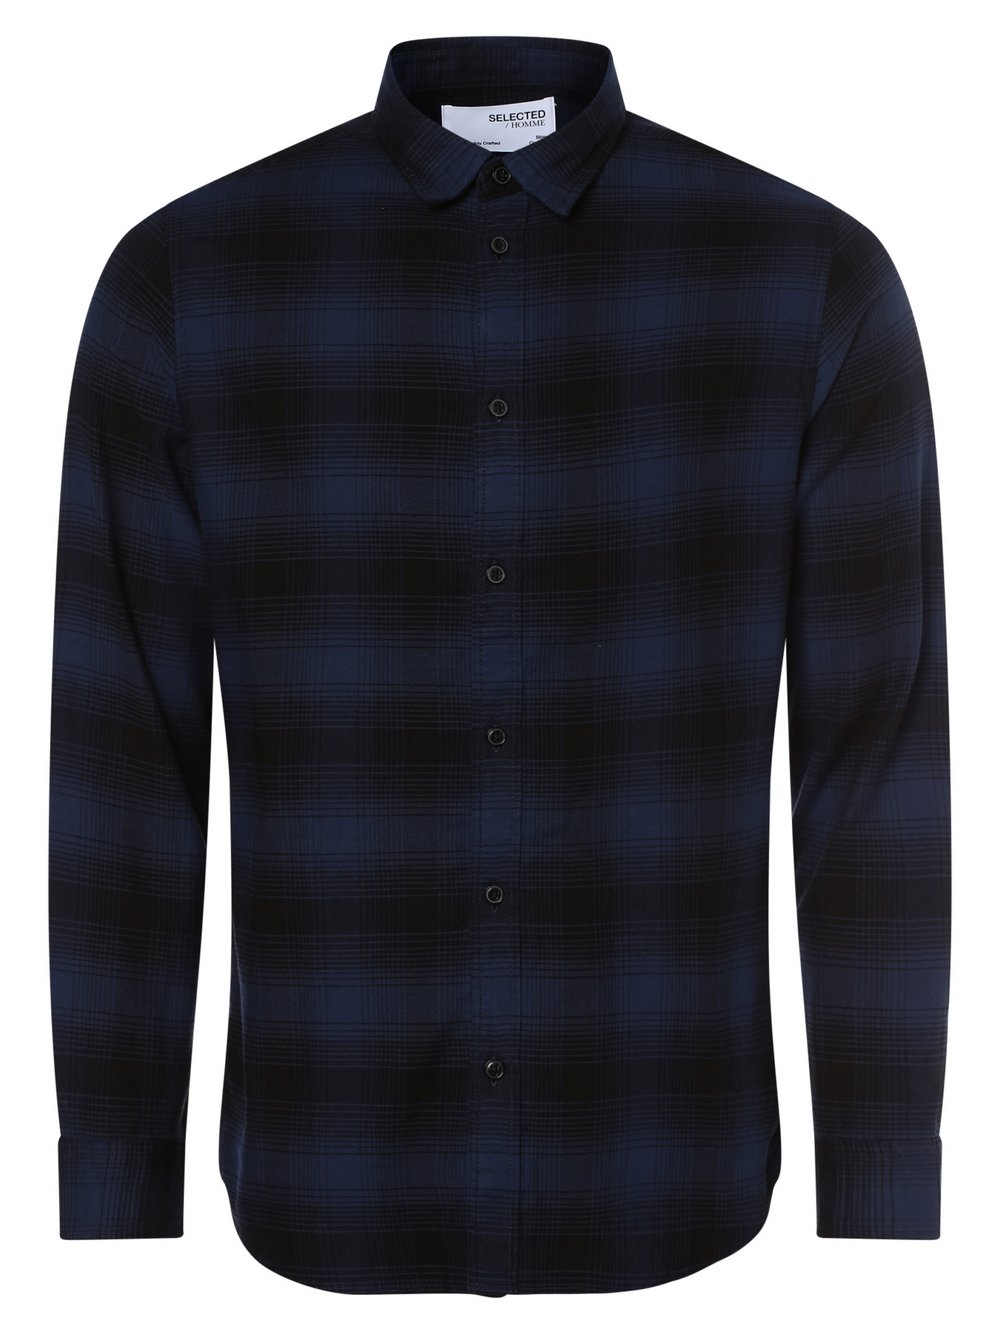 Selected - Koszula męska  SLHSlimowen, niebieski|czarny